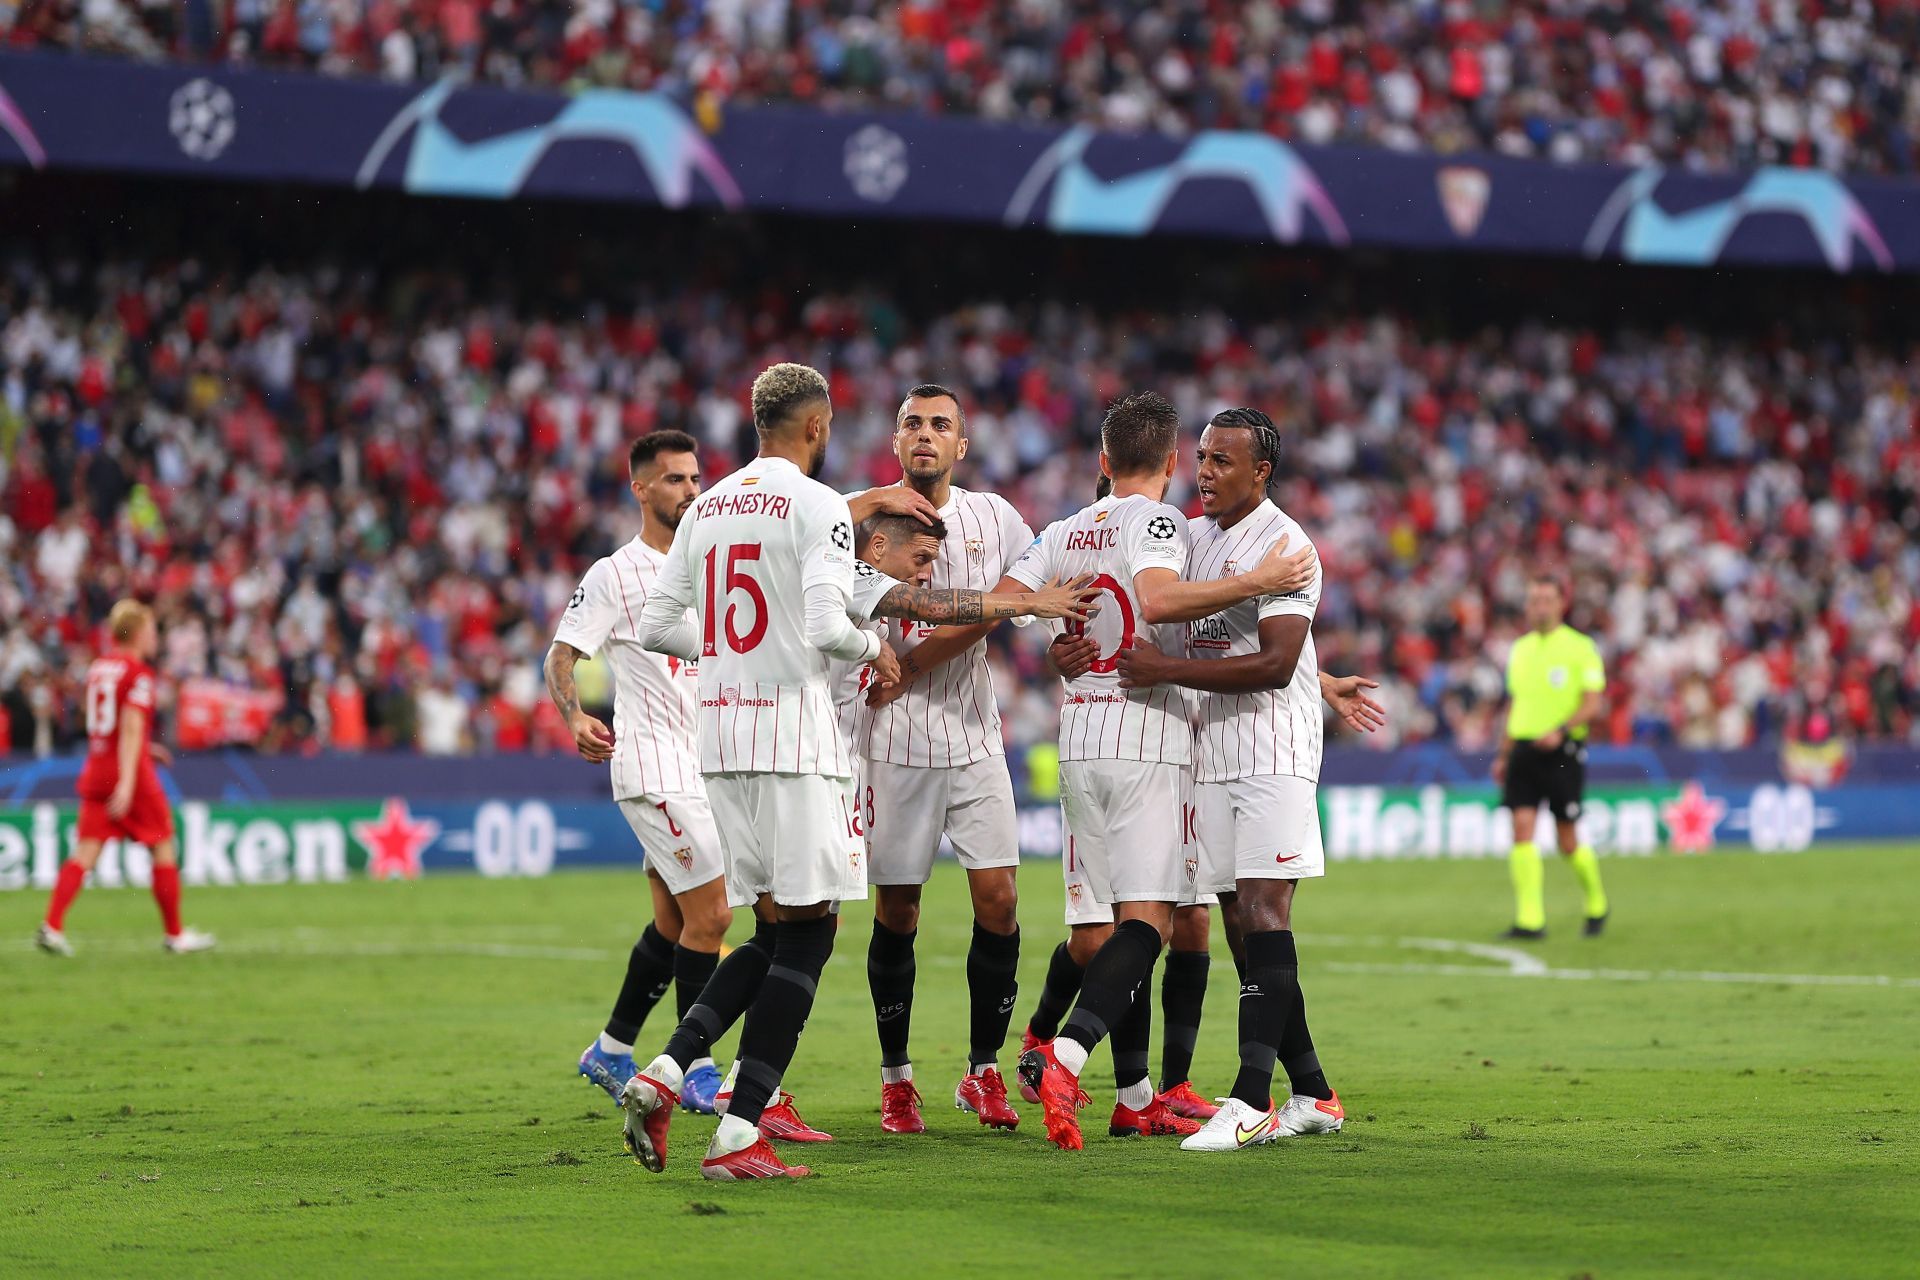 Sevilla take on Mallorca this week